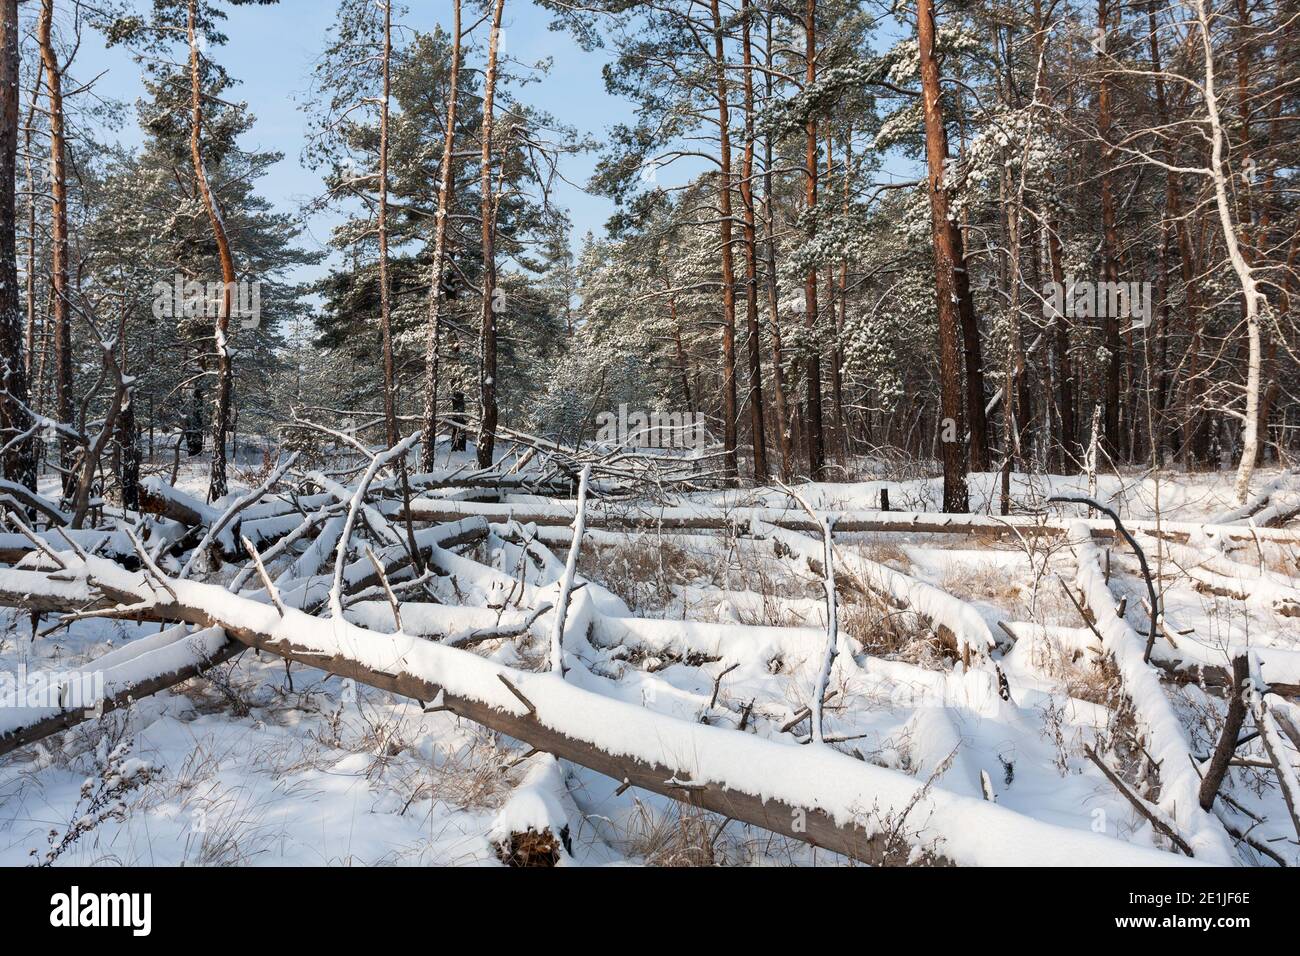 Landscape with windbreak in a snowy winter forest Stock Photo